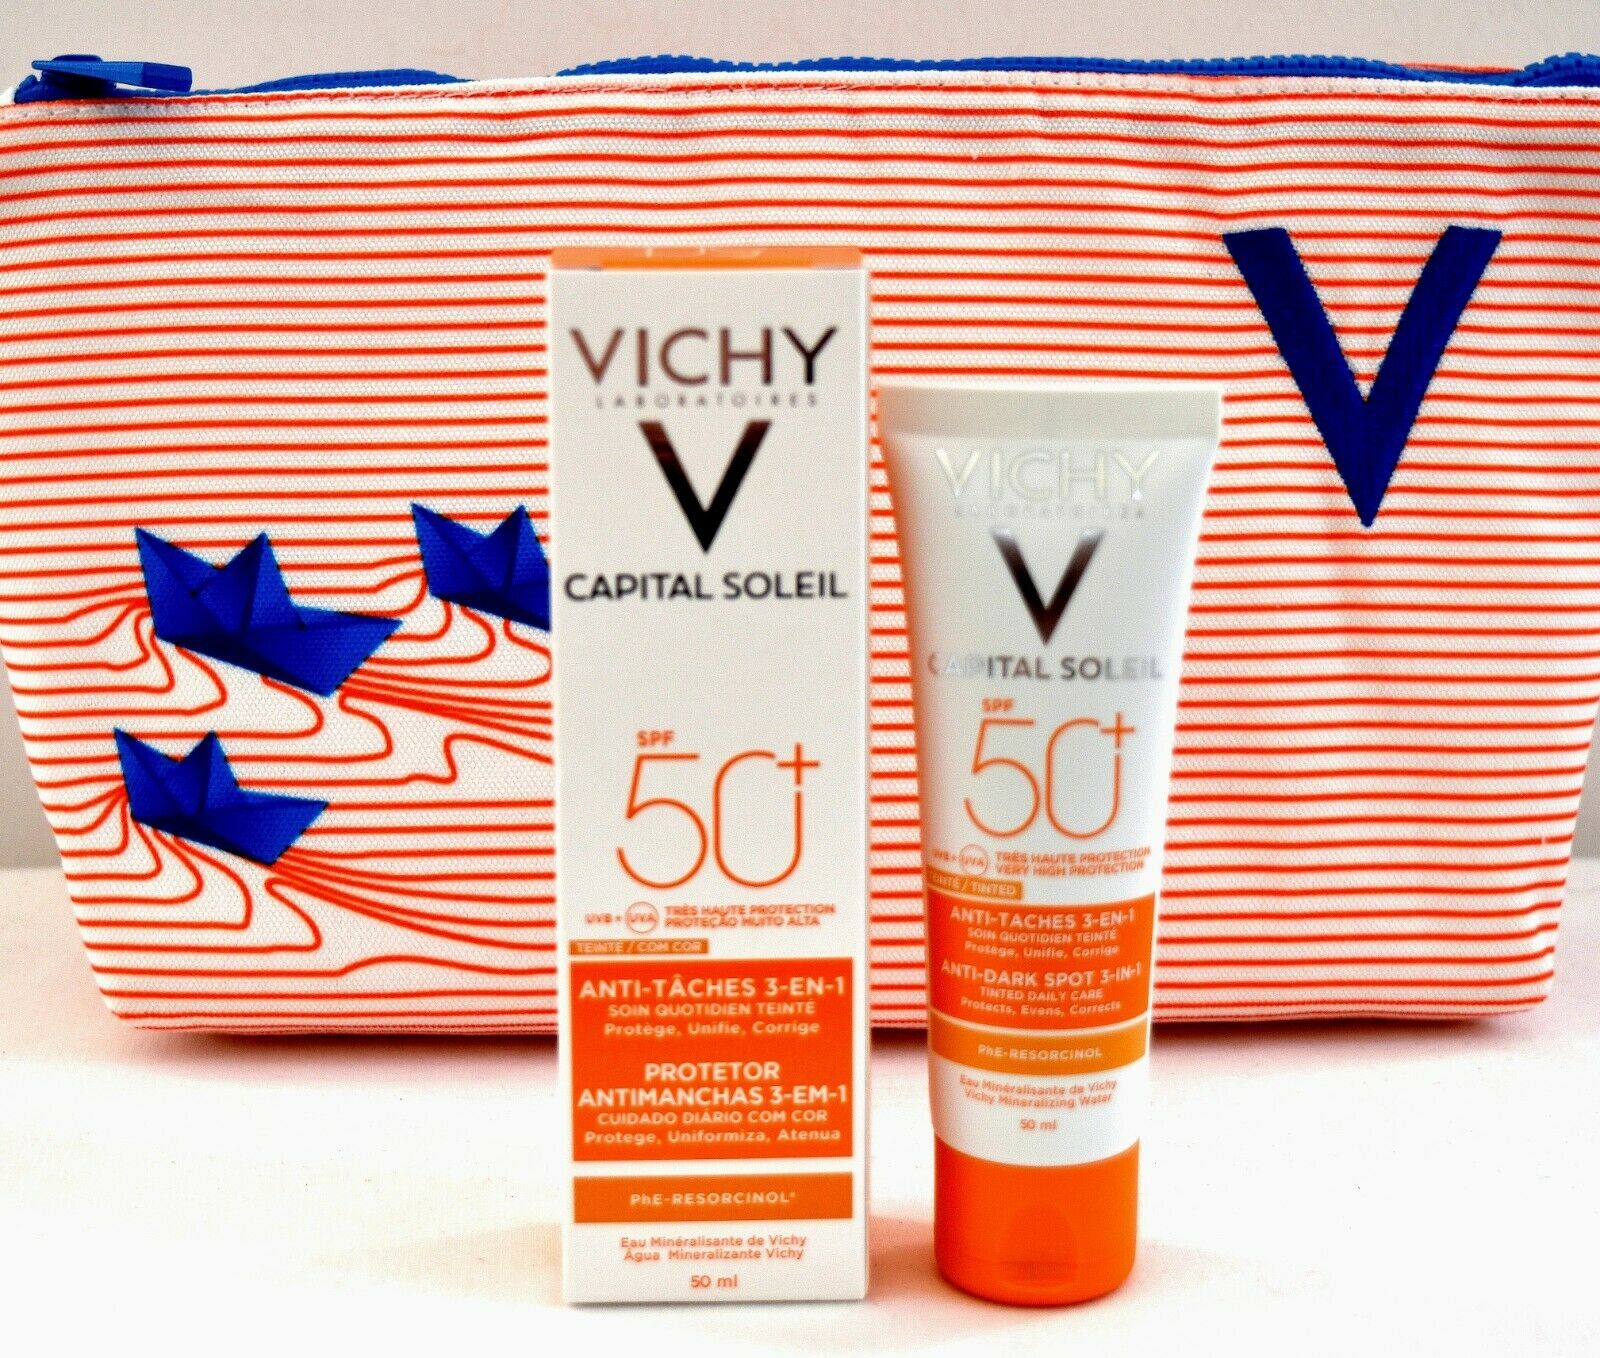 Vichy Capital Soleil SPF 50 Anti-Dark Spot 3-In-1 Tinted 50 ml New 2020